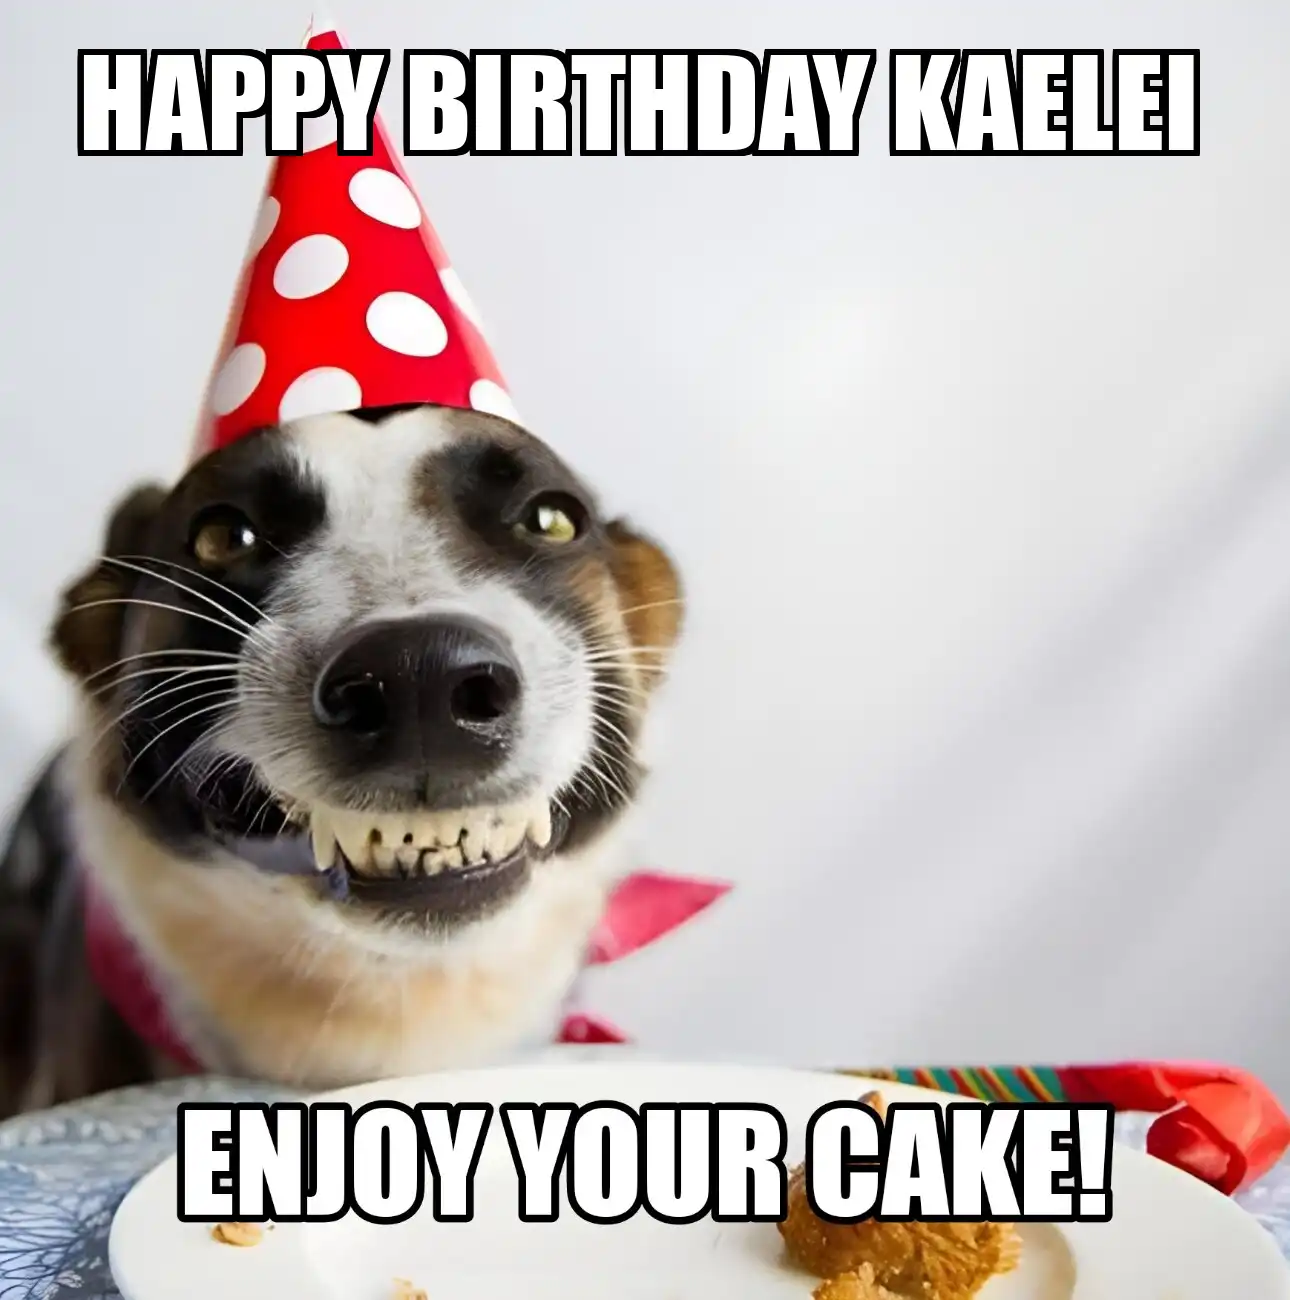 Happy Birthday Kaelei Enjoy Your Cake Dog Meme